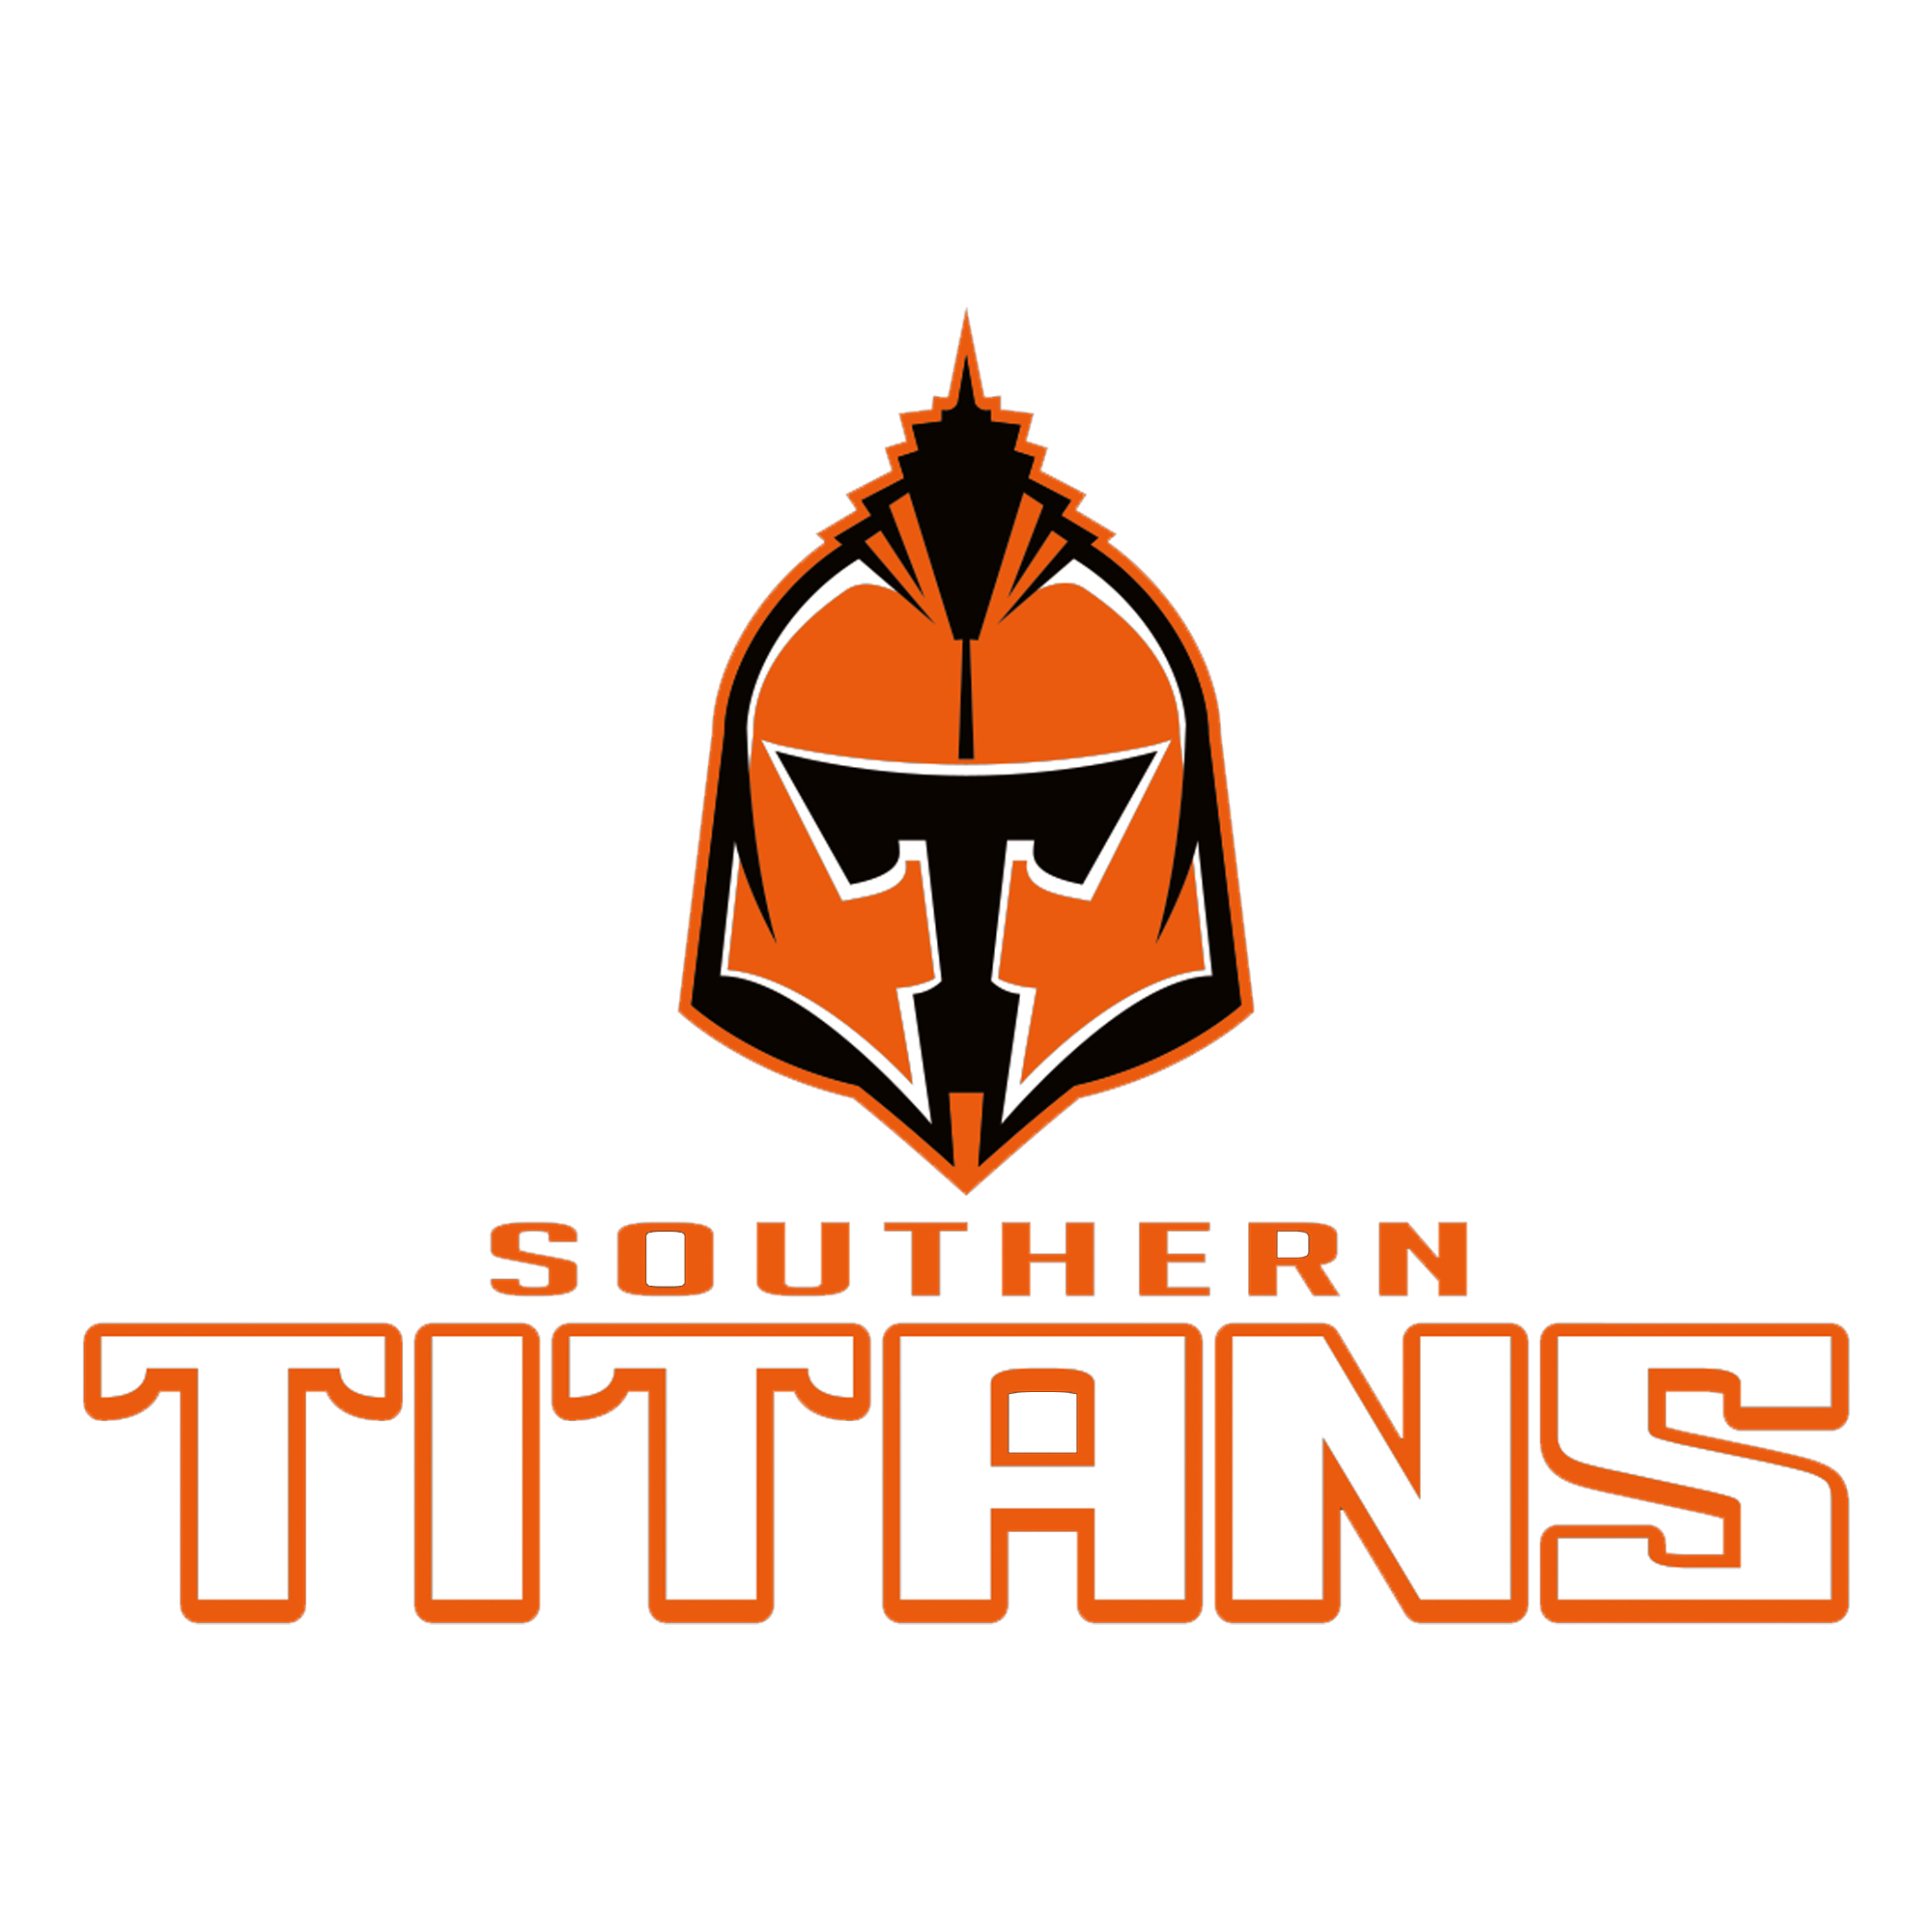 Southern Titans - Admin